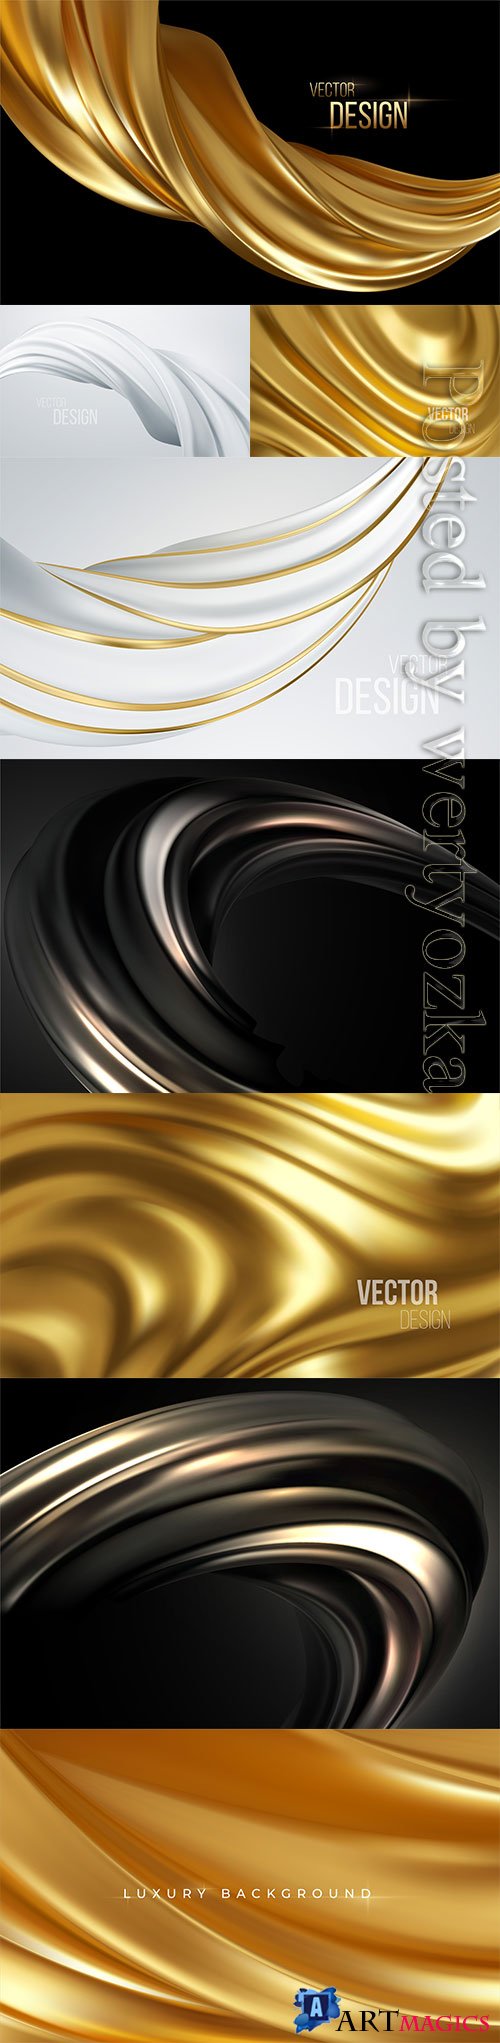 Gold metallic silk flowing wave luxury vector background